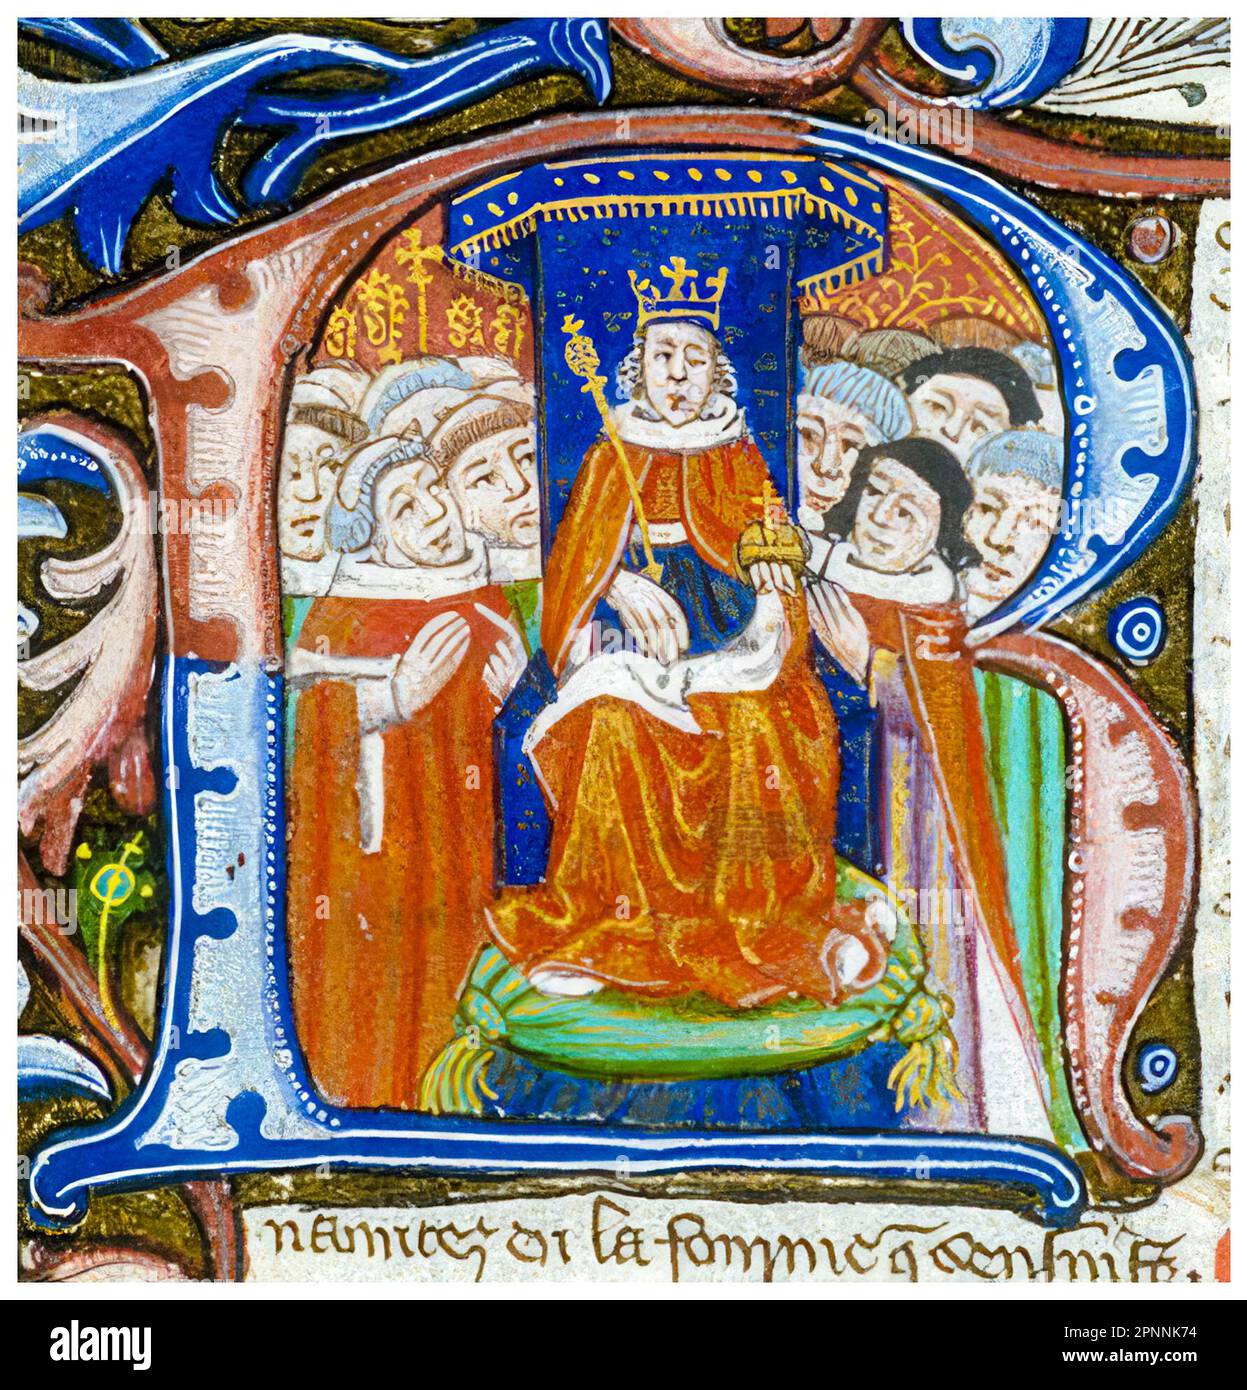 Portrait du roi Richard III peint à la main en vitrail, attrape